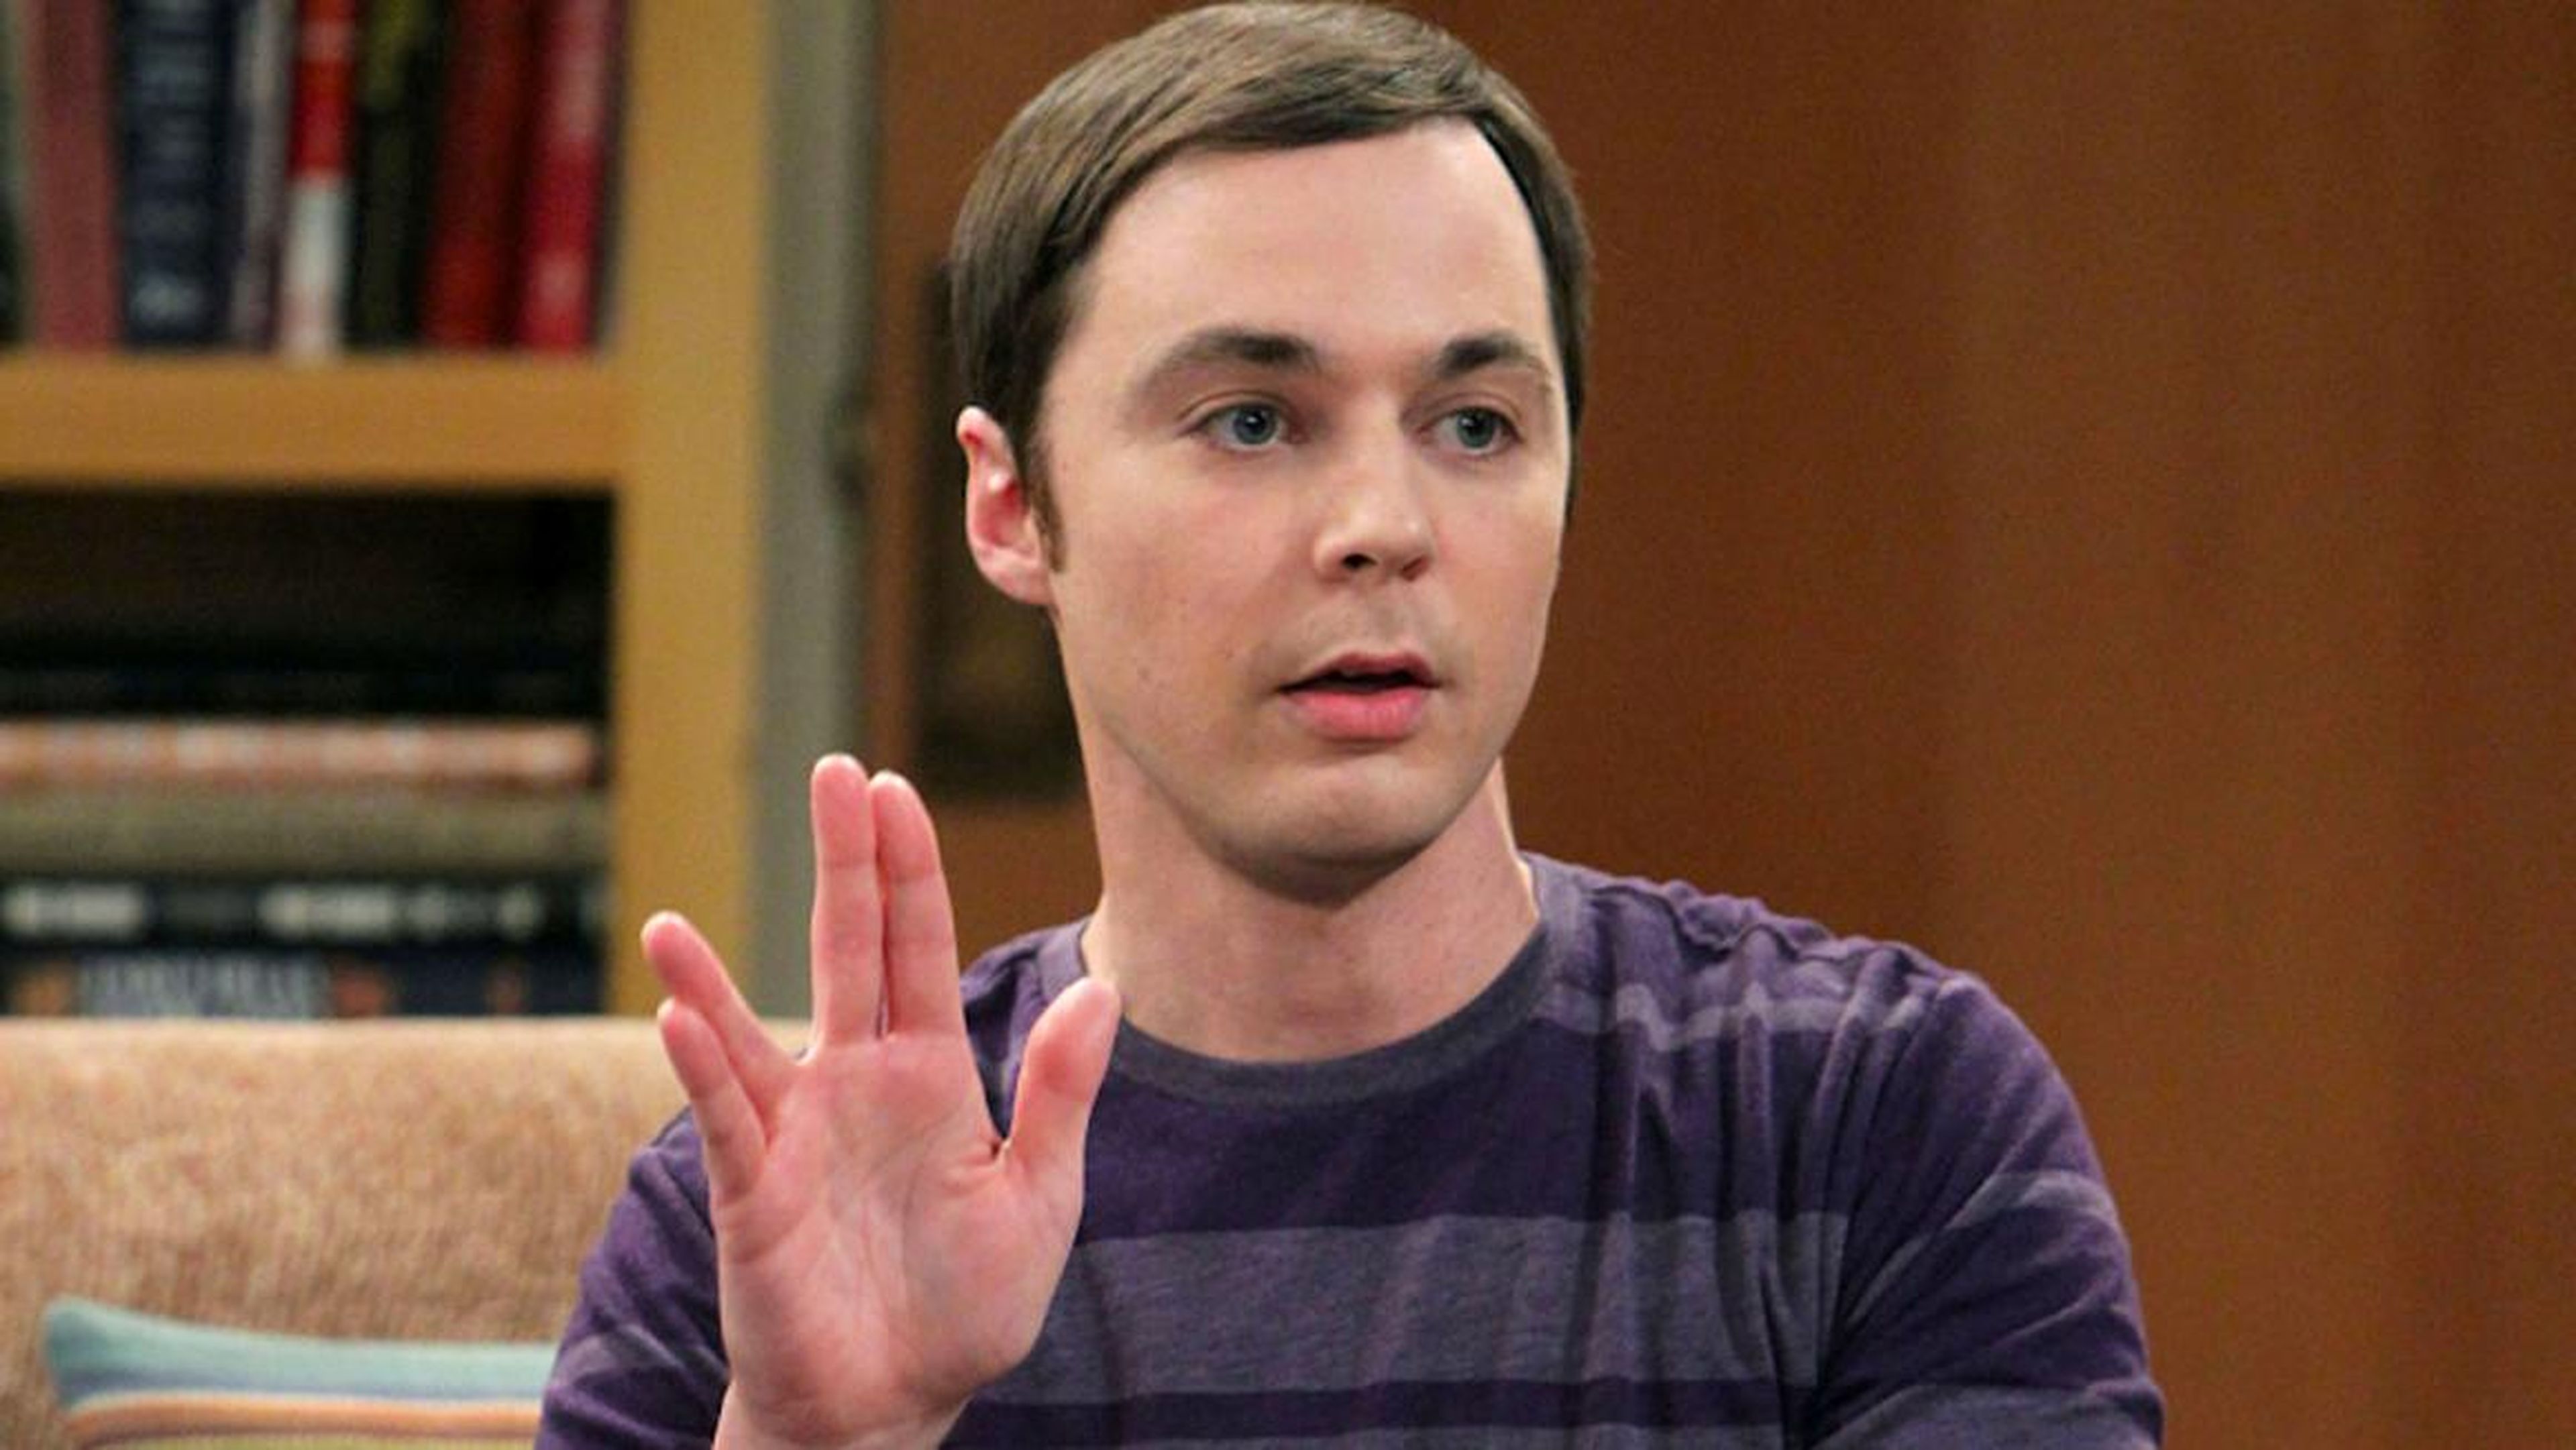 La serie de CBS The Big Bang Theory